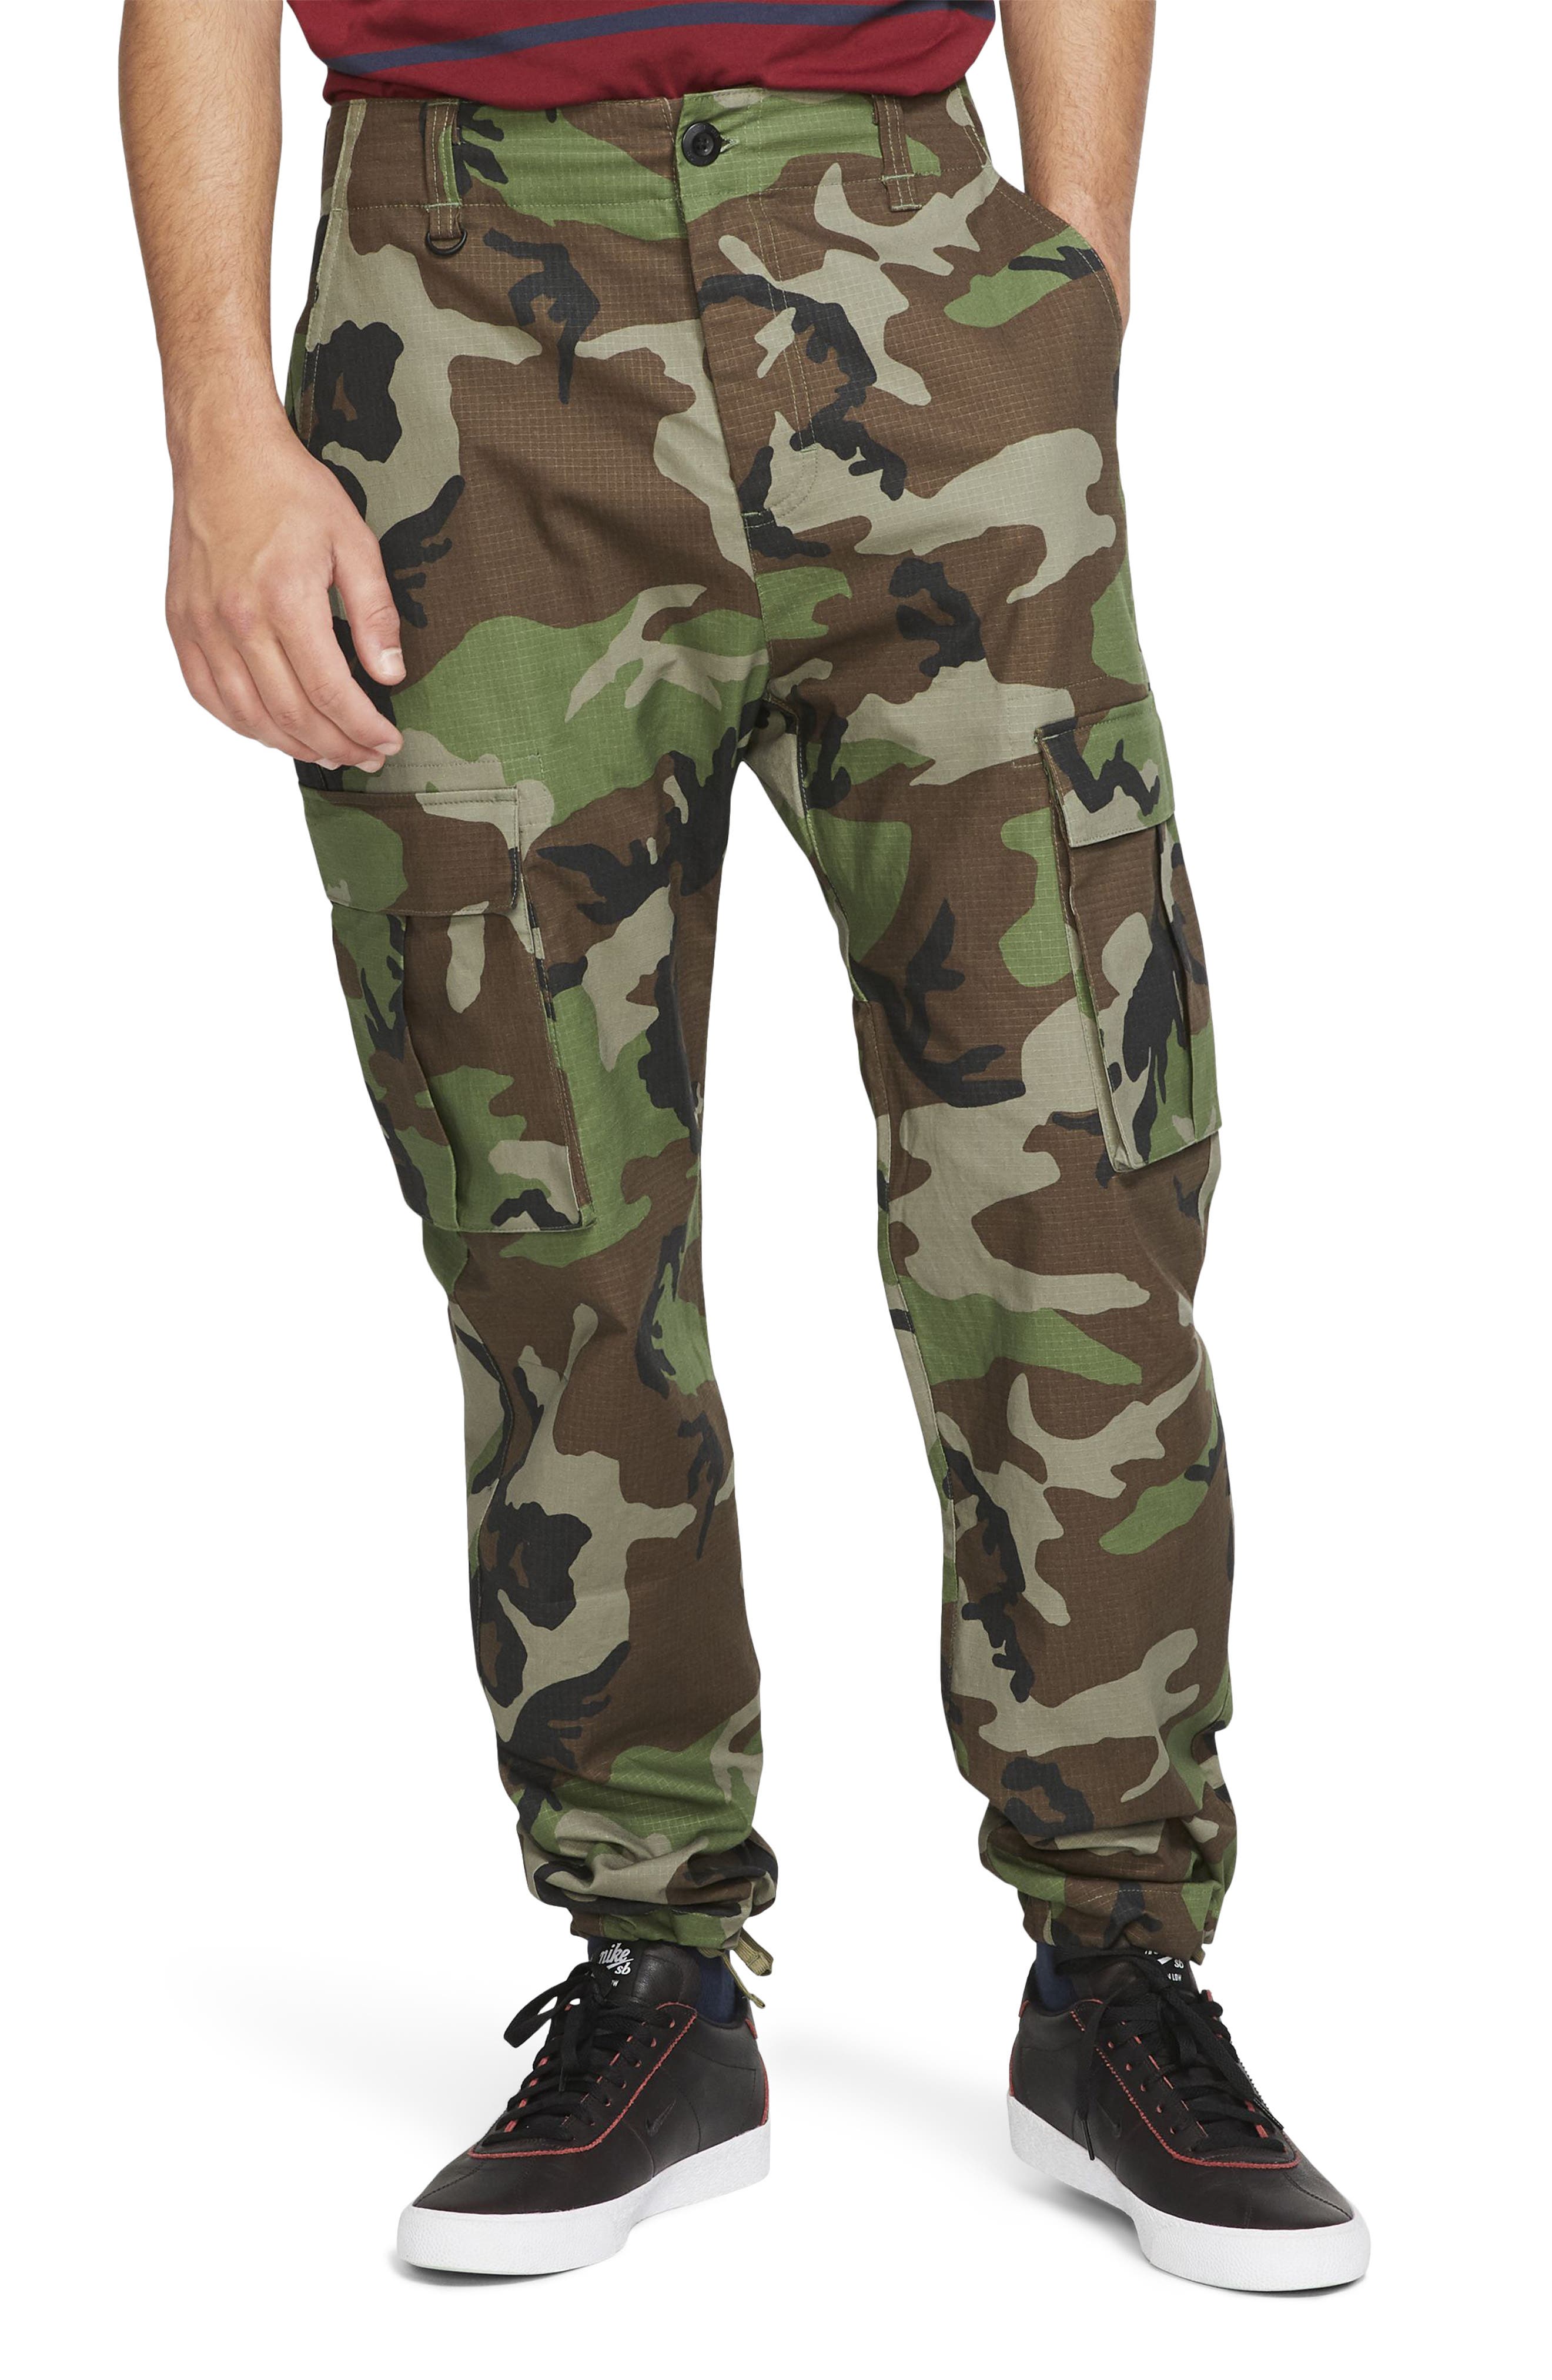 nike military shorts